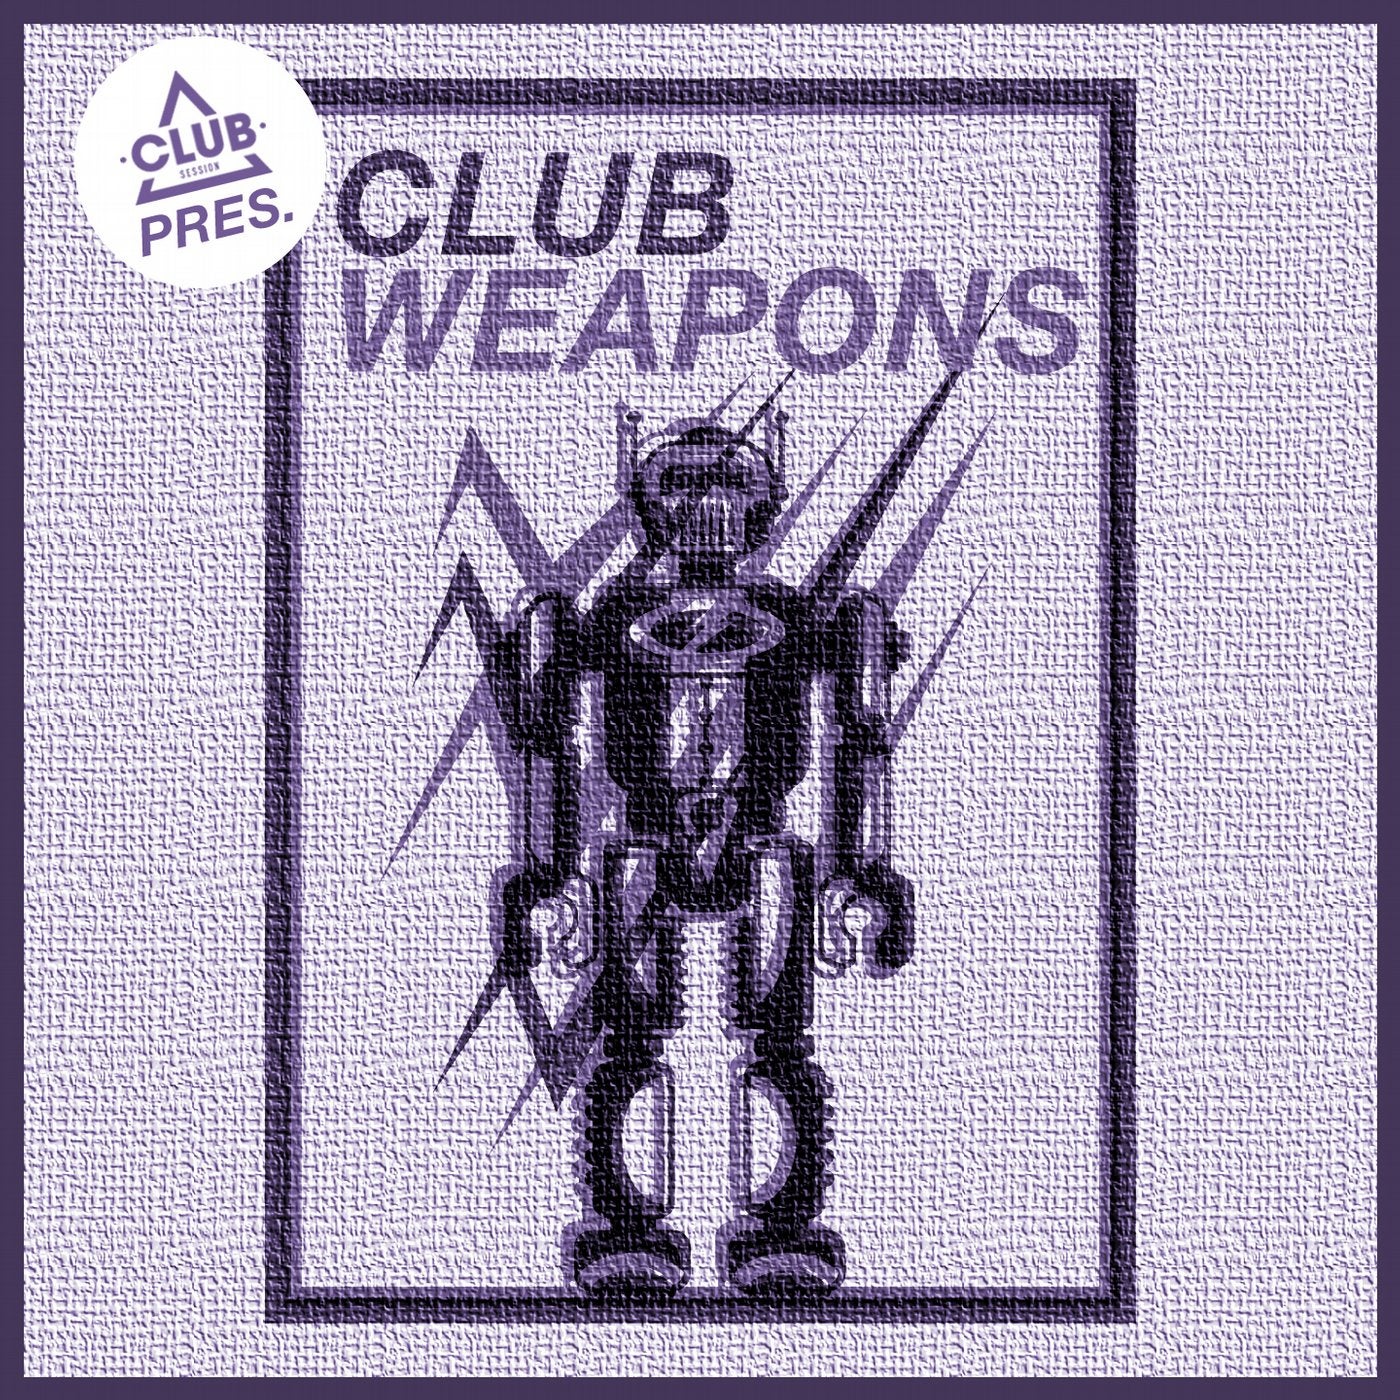 Club Session pres. Club Weapons